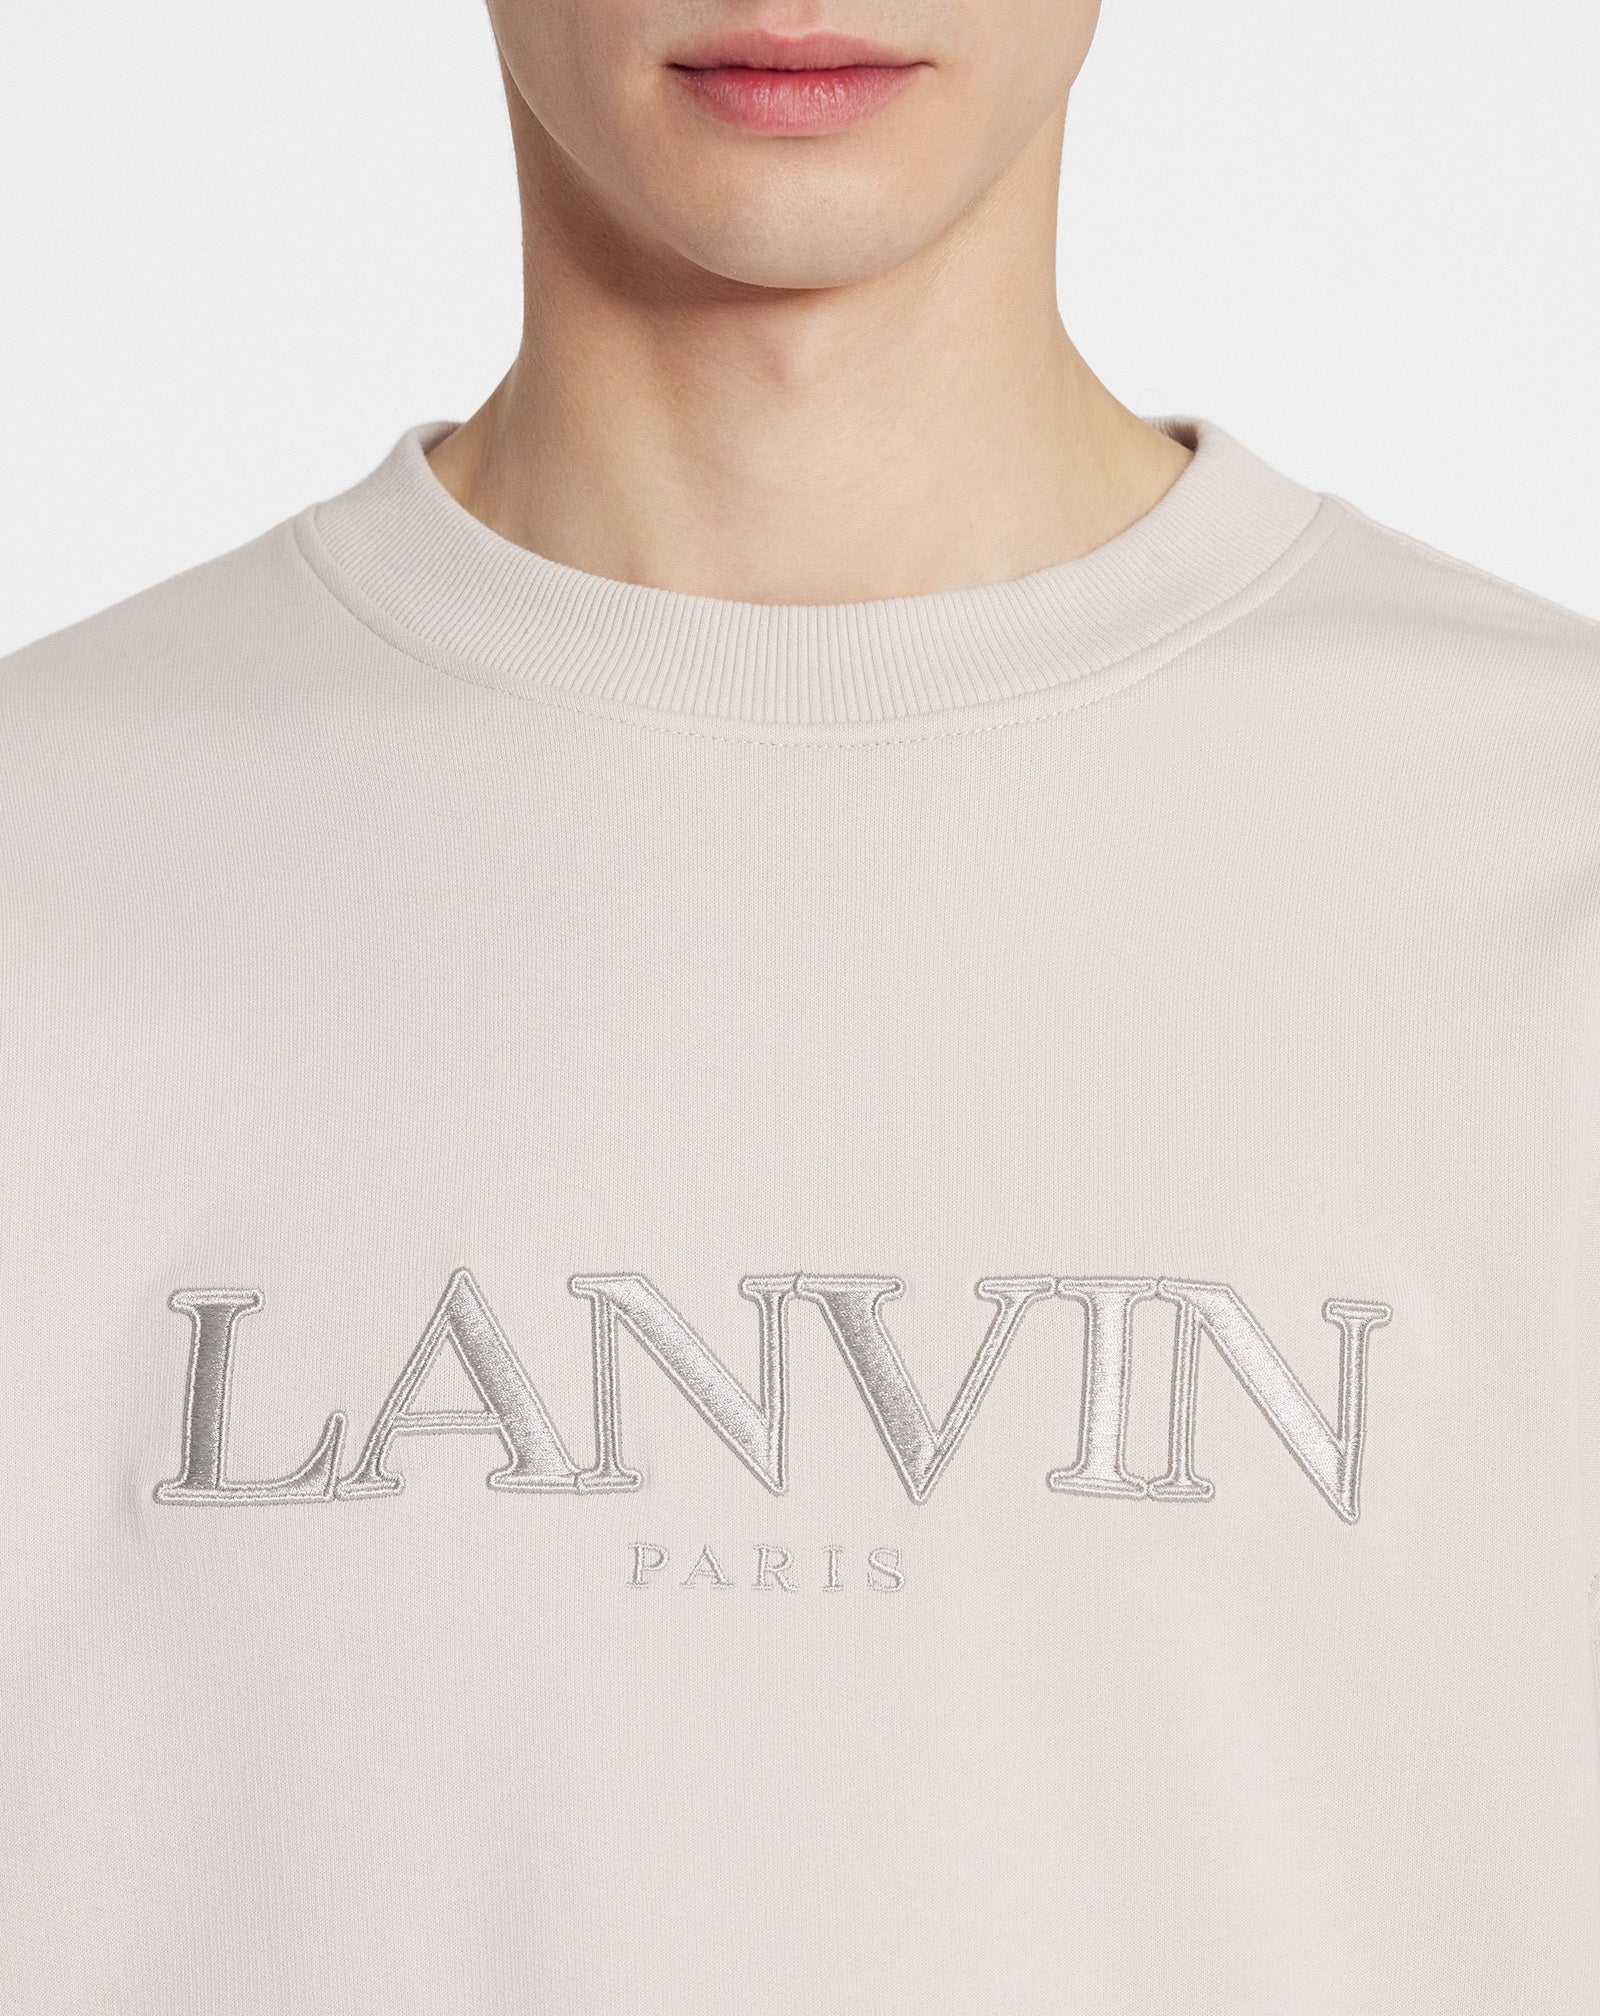 OVERSIZED EMBROIDERED LANVIN PARIS SWEATSHIRT MASTIC | Lanvin